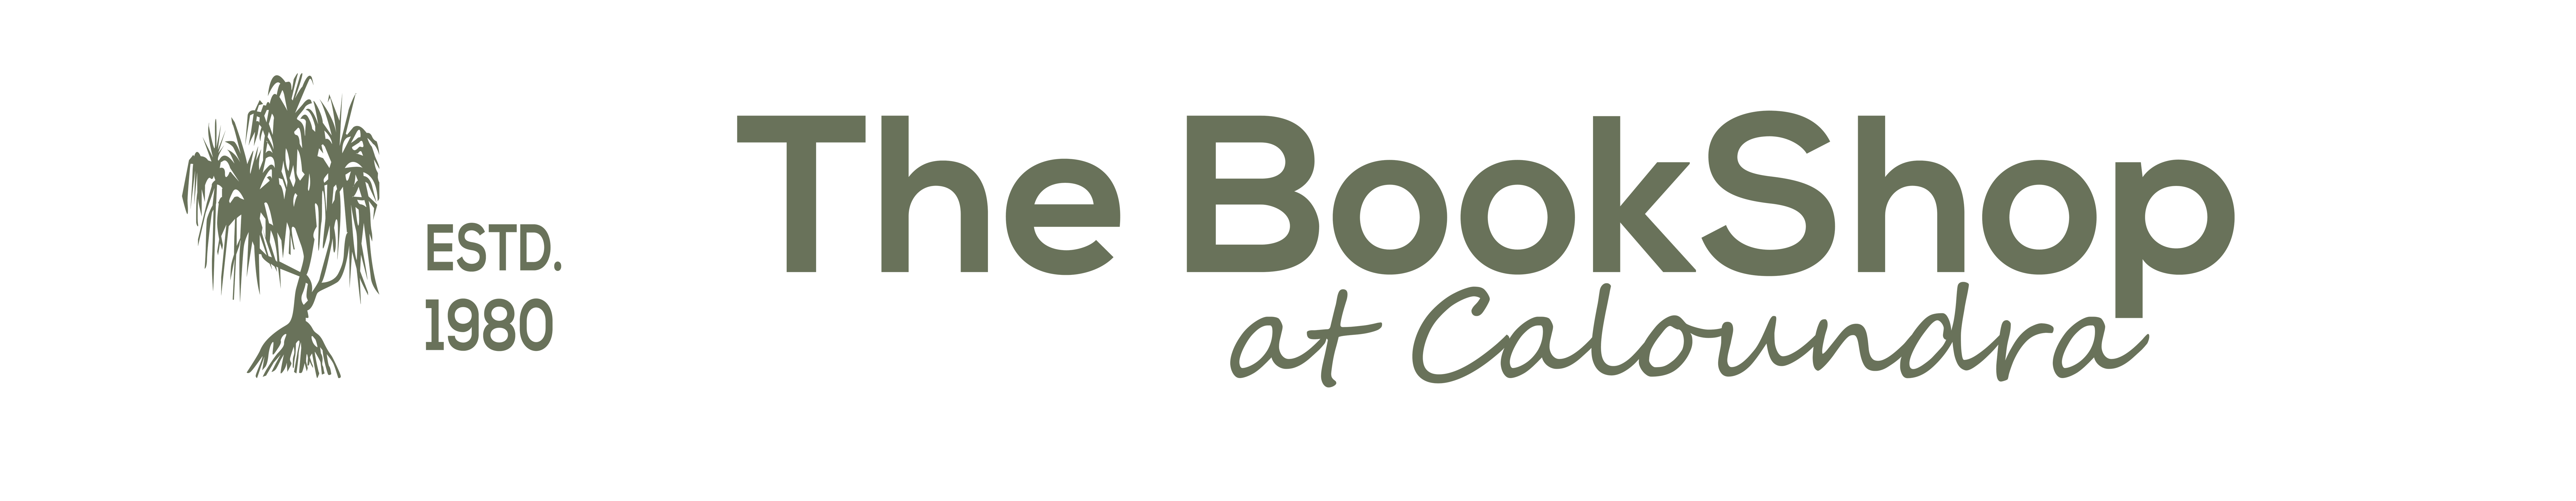 The Bookshop at Caloundra | Independent Book Store Sunshine Coast Queensland